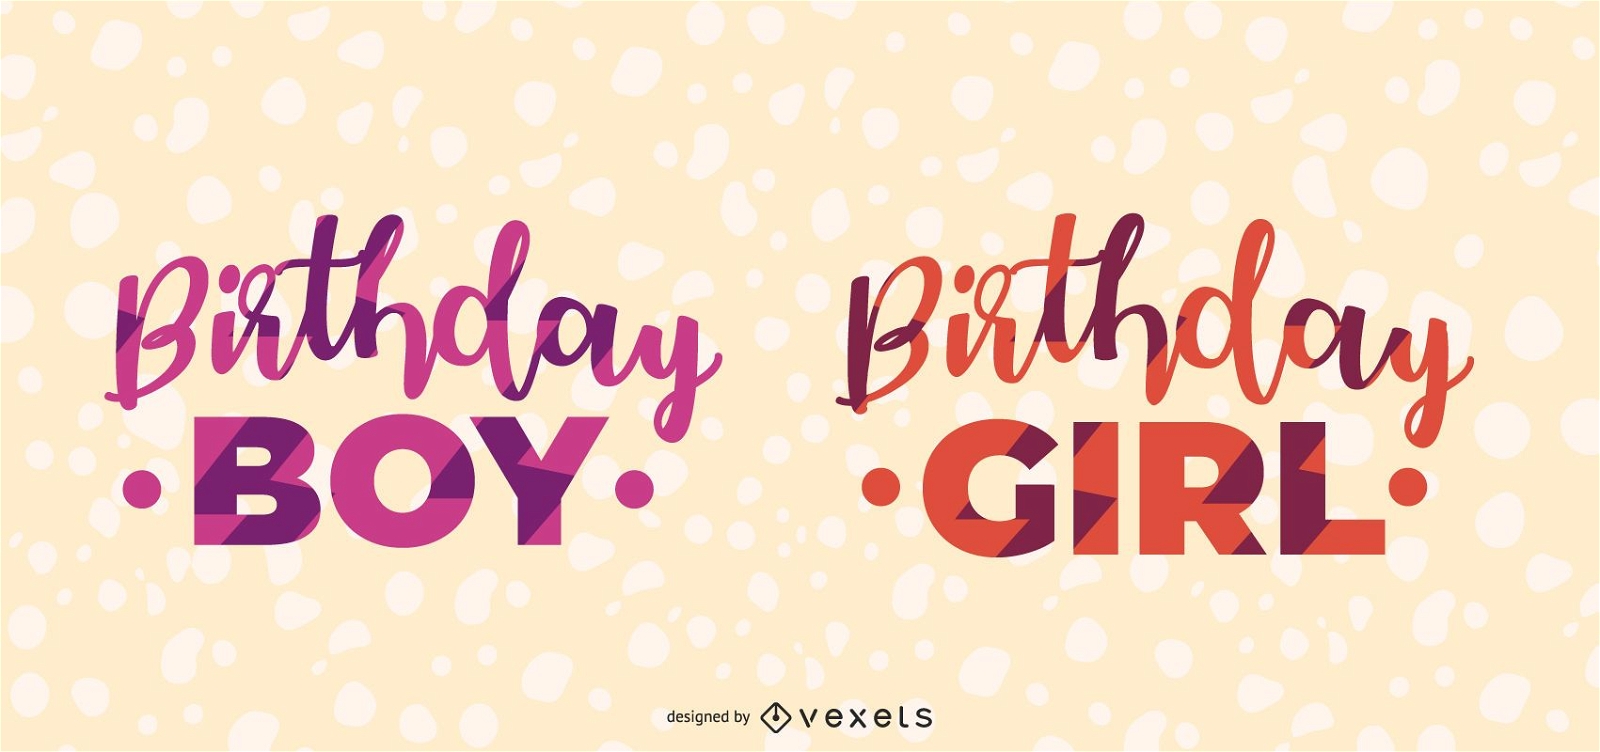 Birthday Boy and Girl Lettering Design